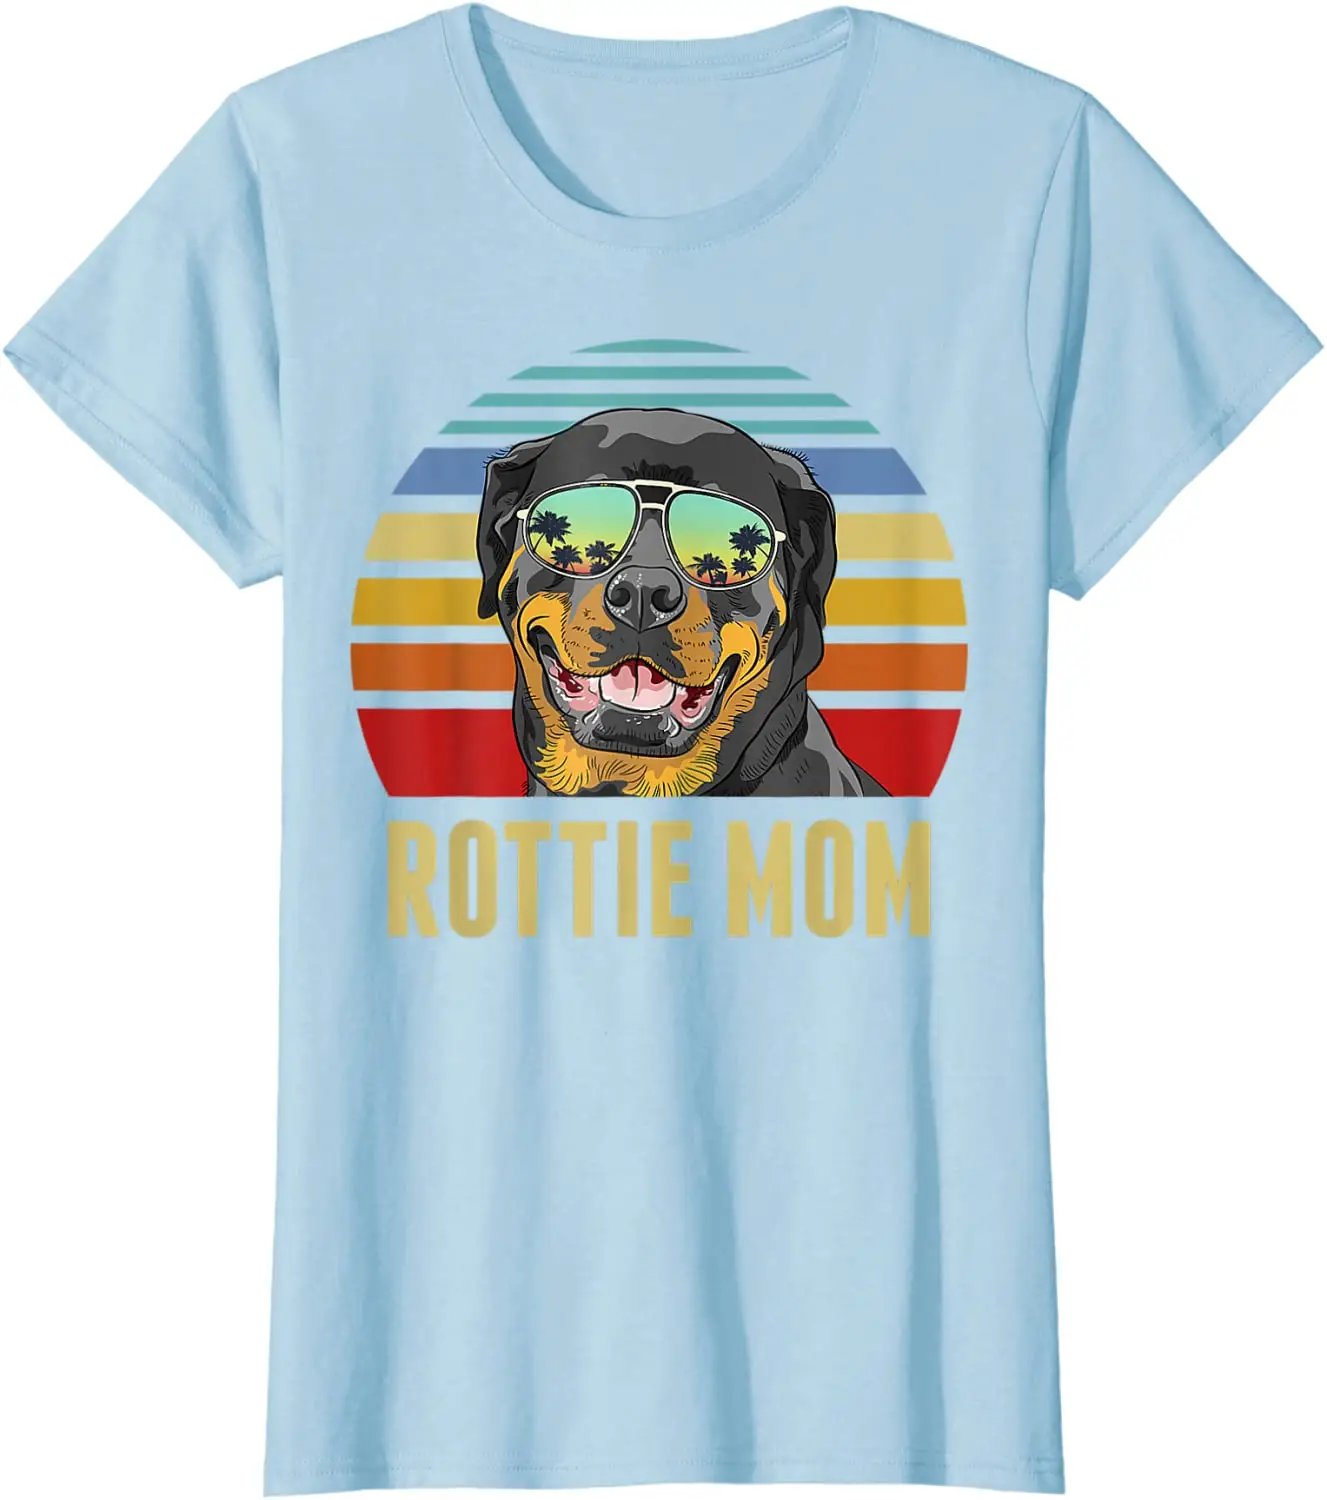 Rottie Mom Rottweiler Dog Vintage Retro Sunset Beach Vibe T Shirt